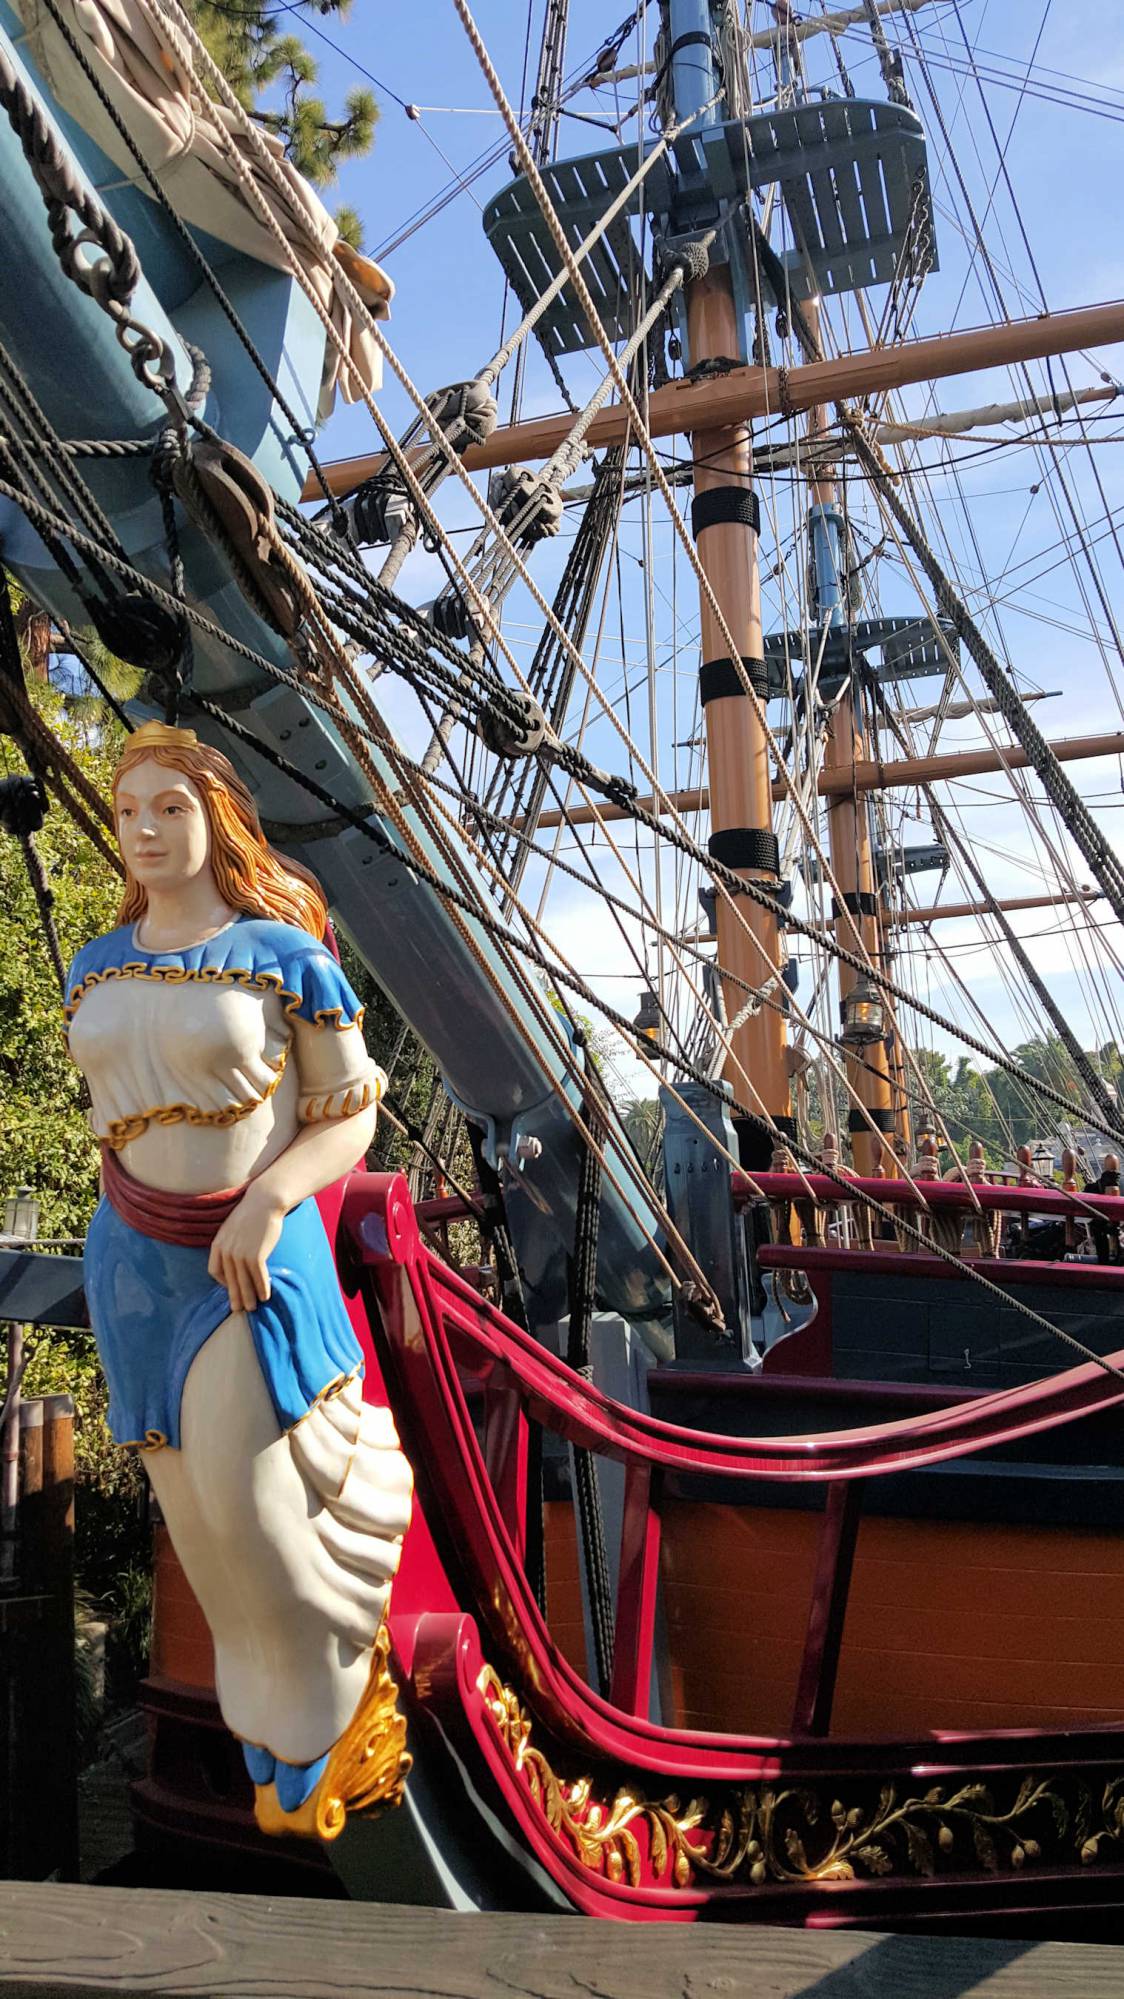 Disneyland Frontierland Sailing Ship Columbia figurehead